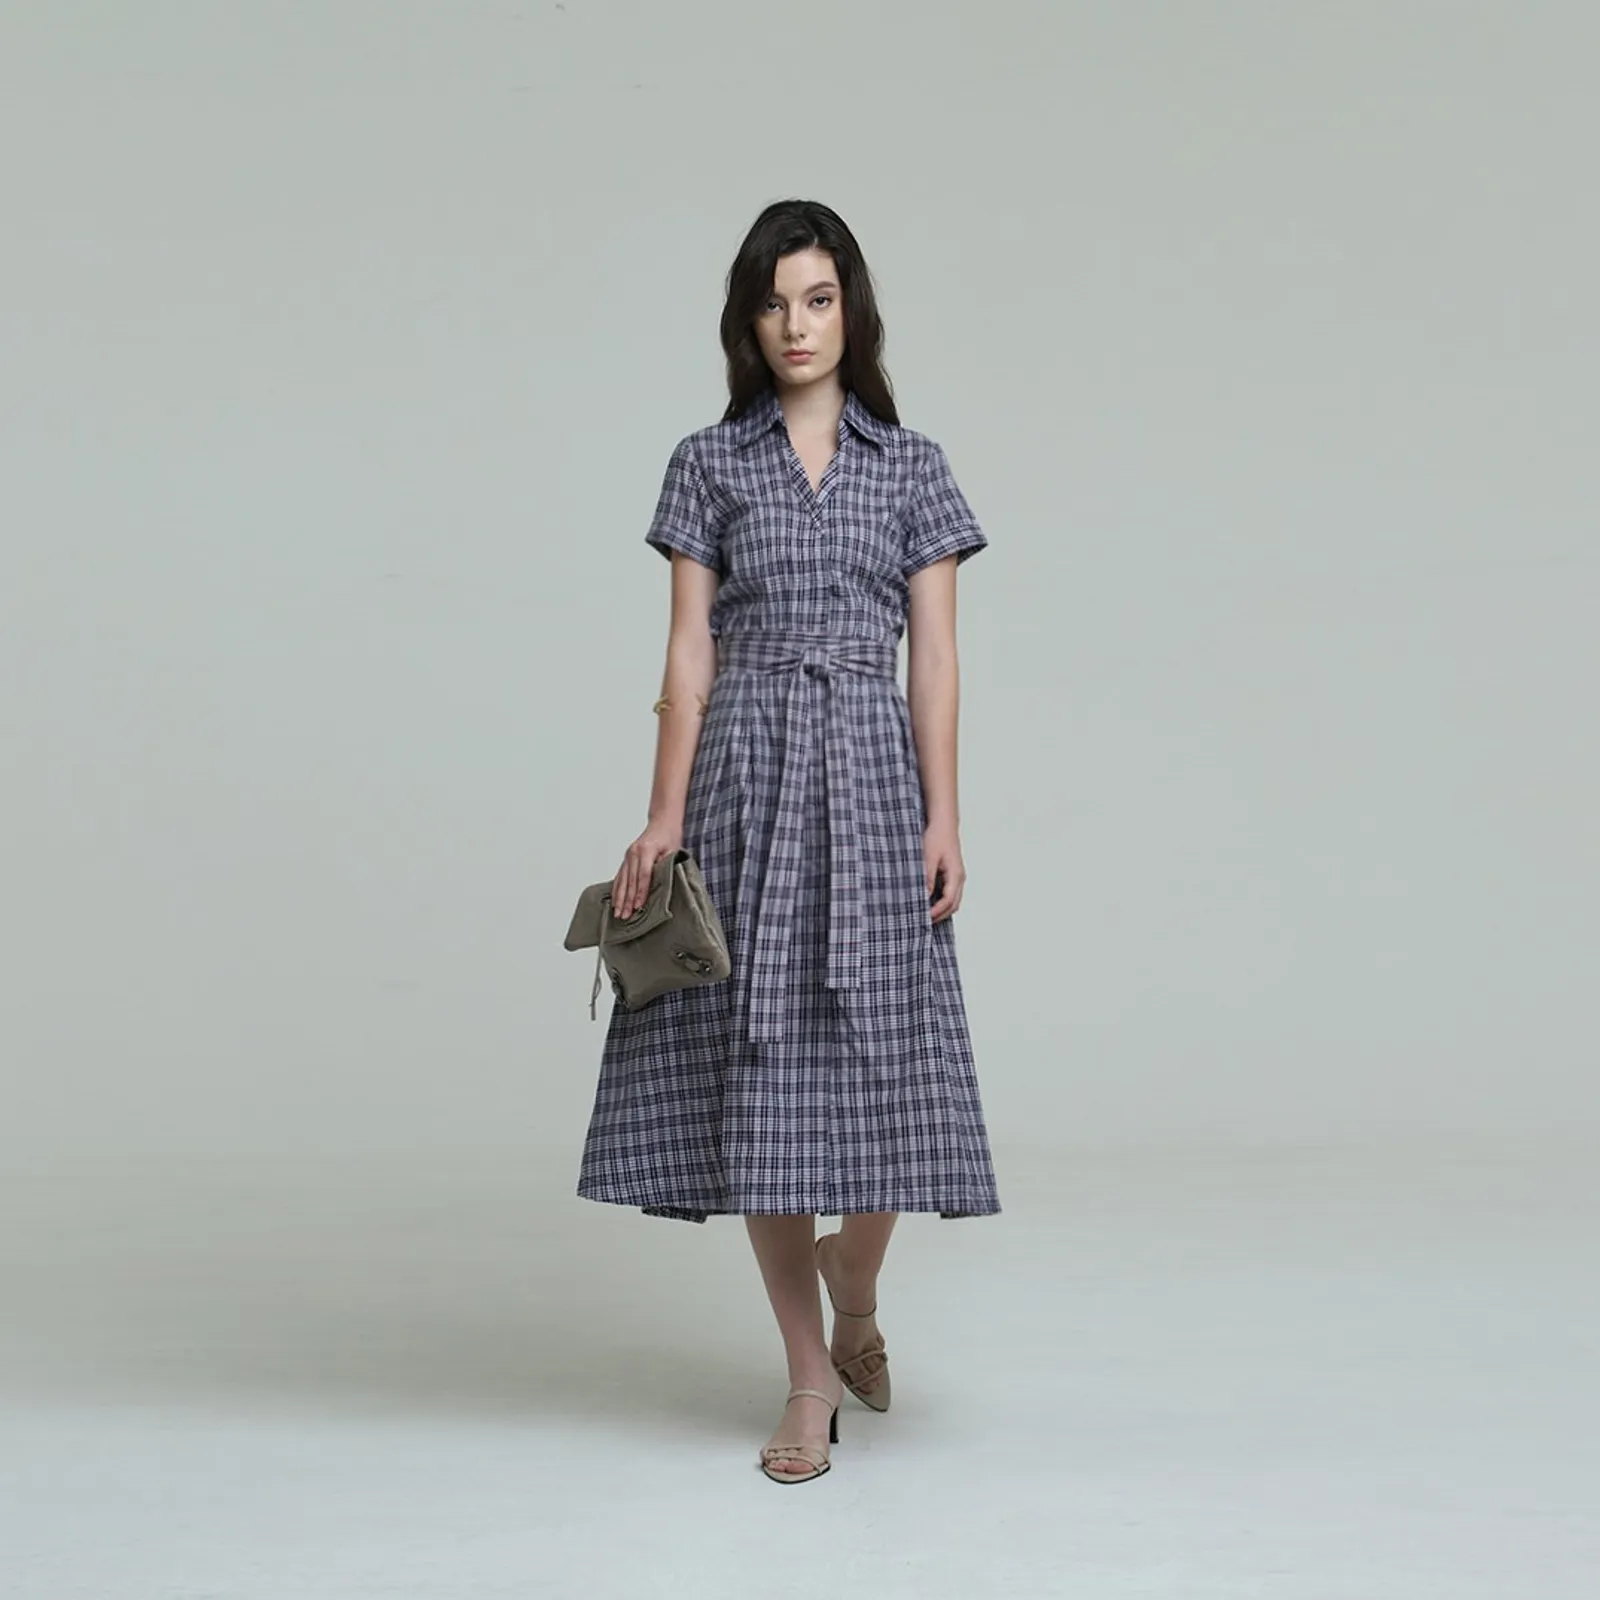 #PopbelaOOTD: Rekomendasi Dress Motif Keren, Cocok untuk Musim Panas!